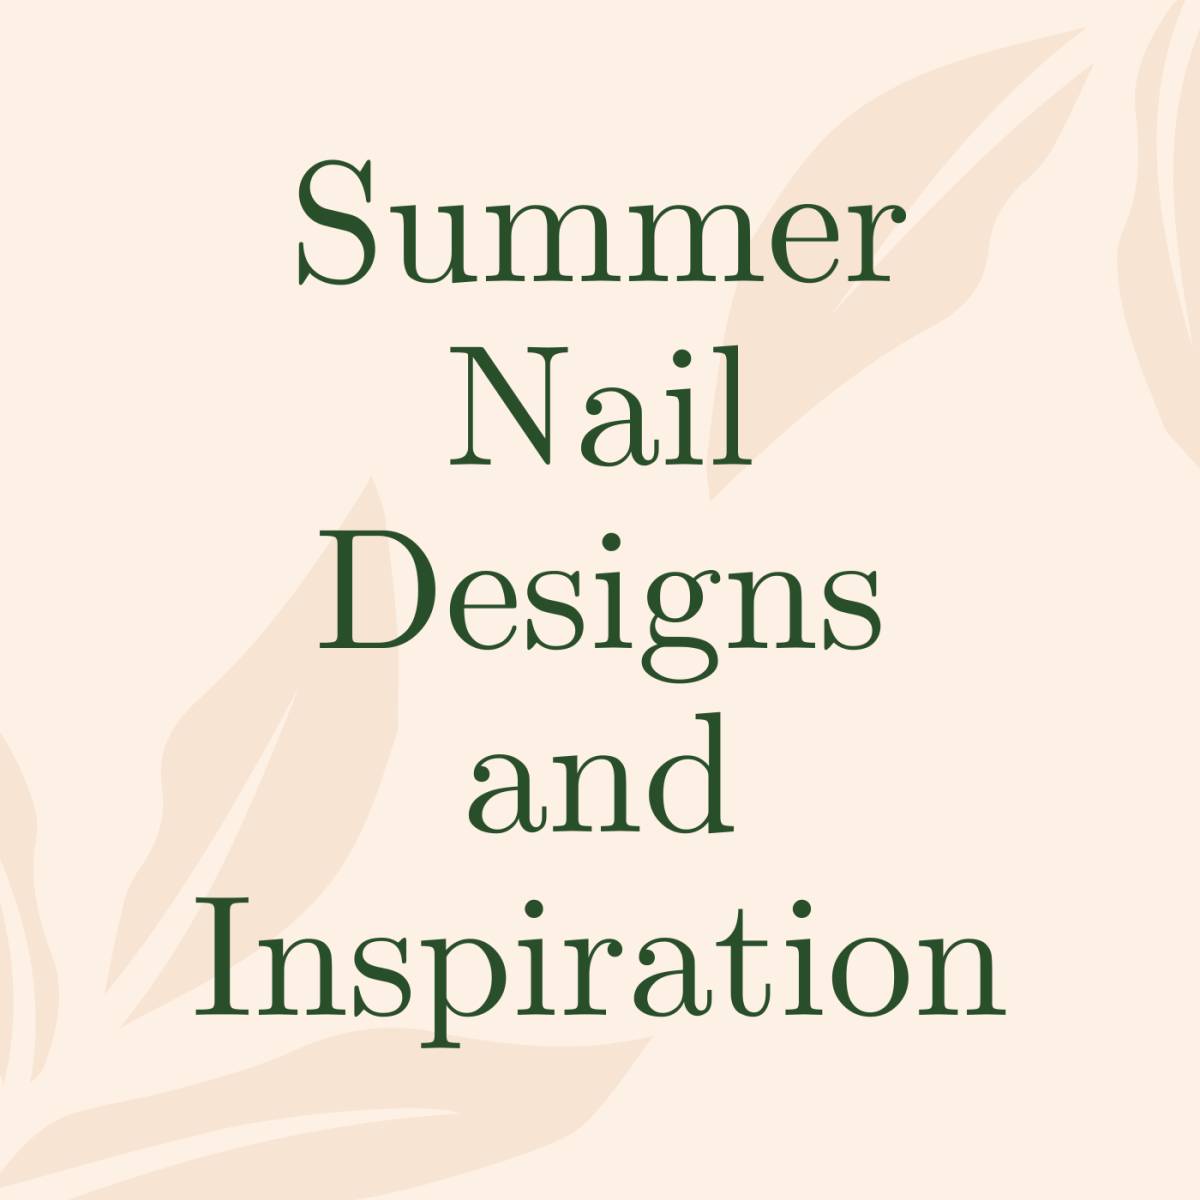 Cute Summer Nail Art Designs and Inspiration